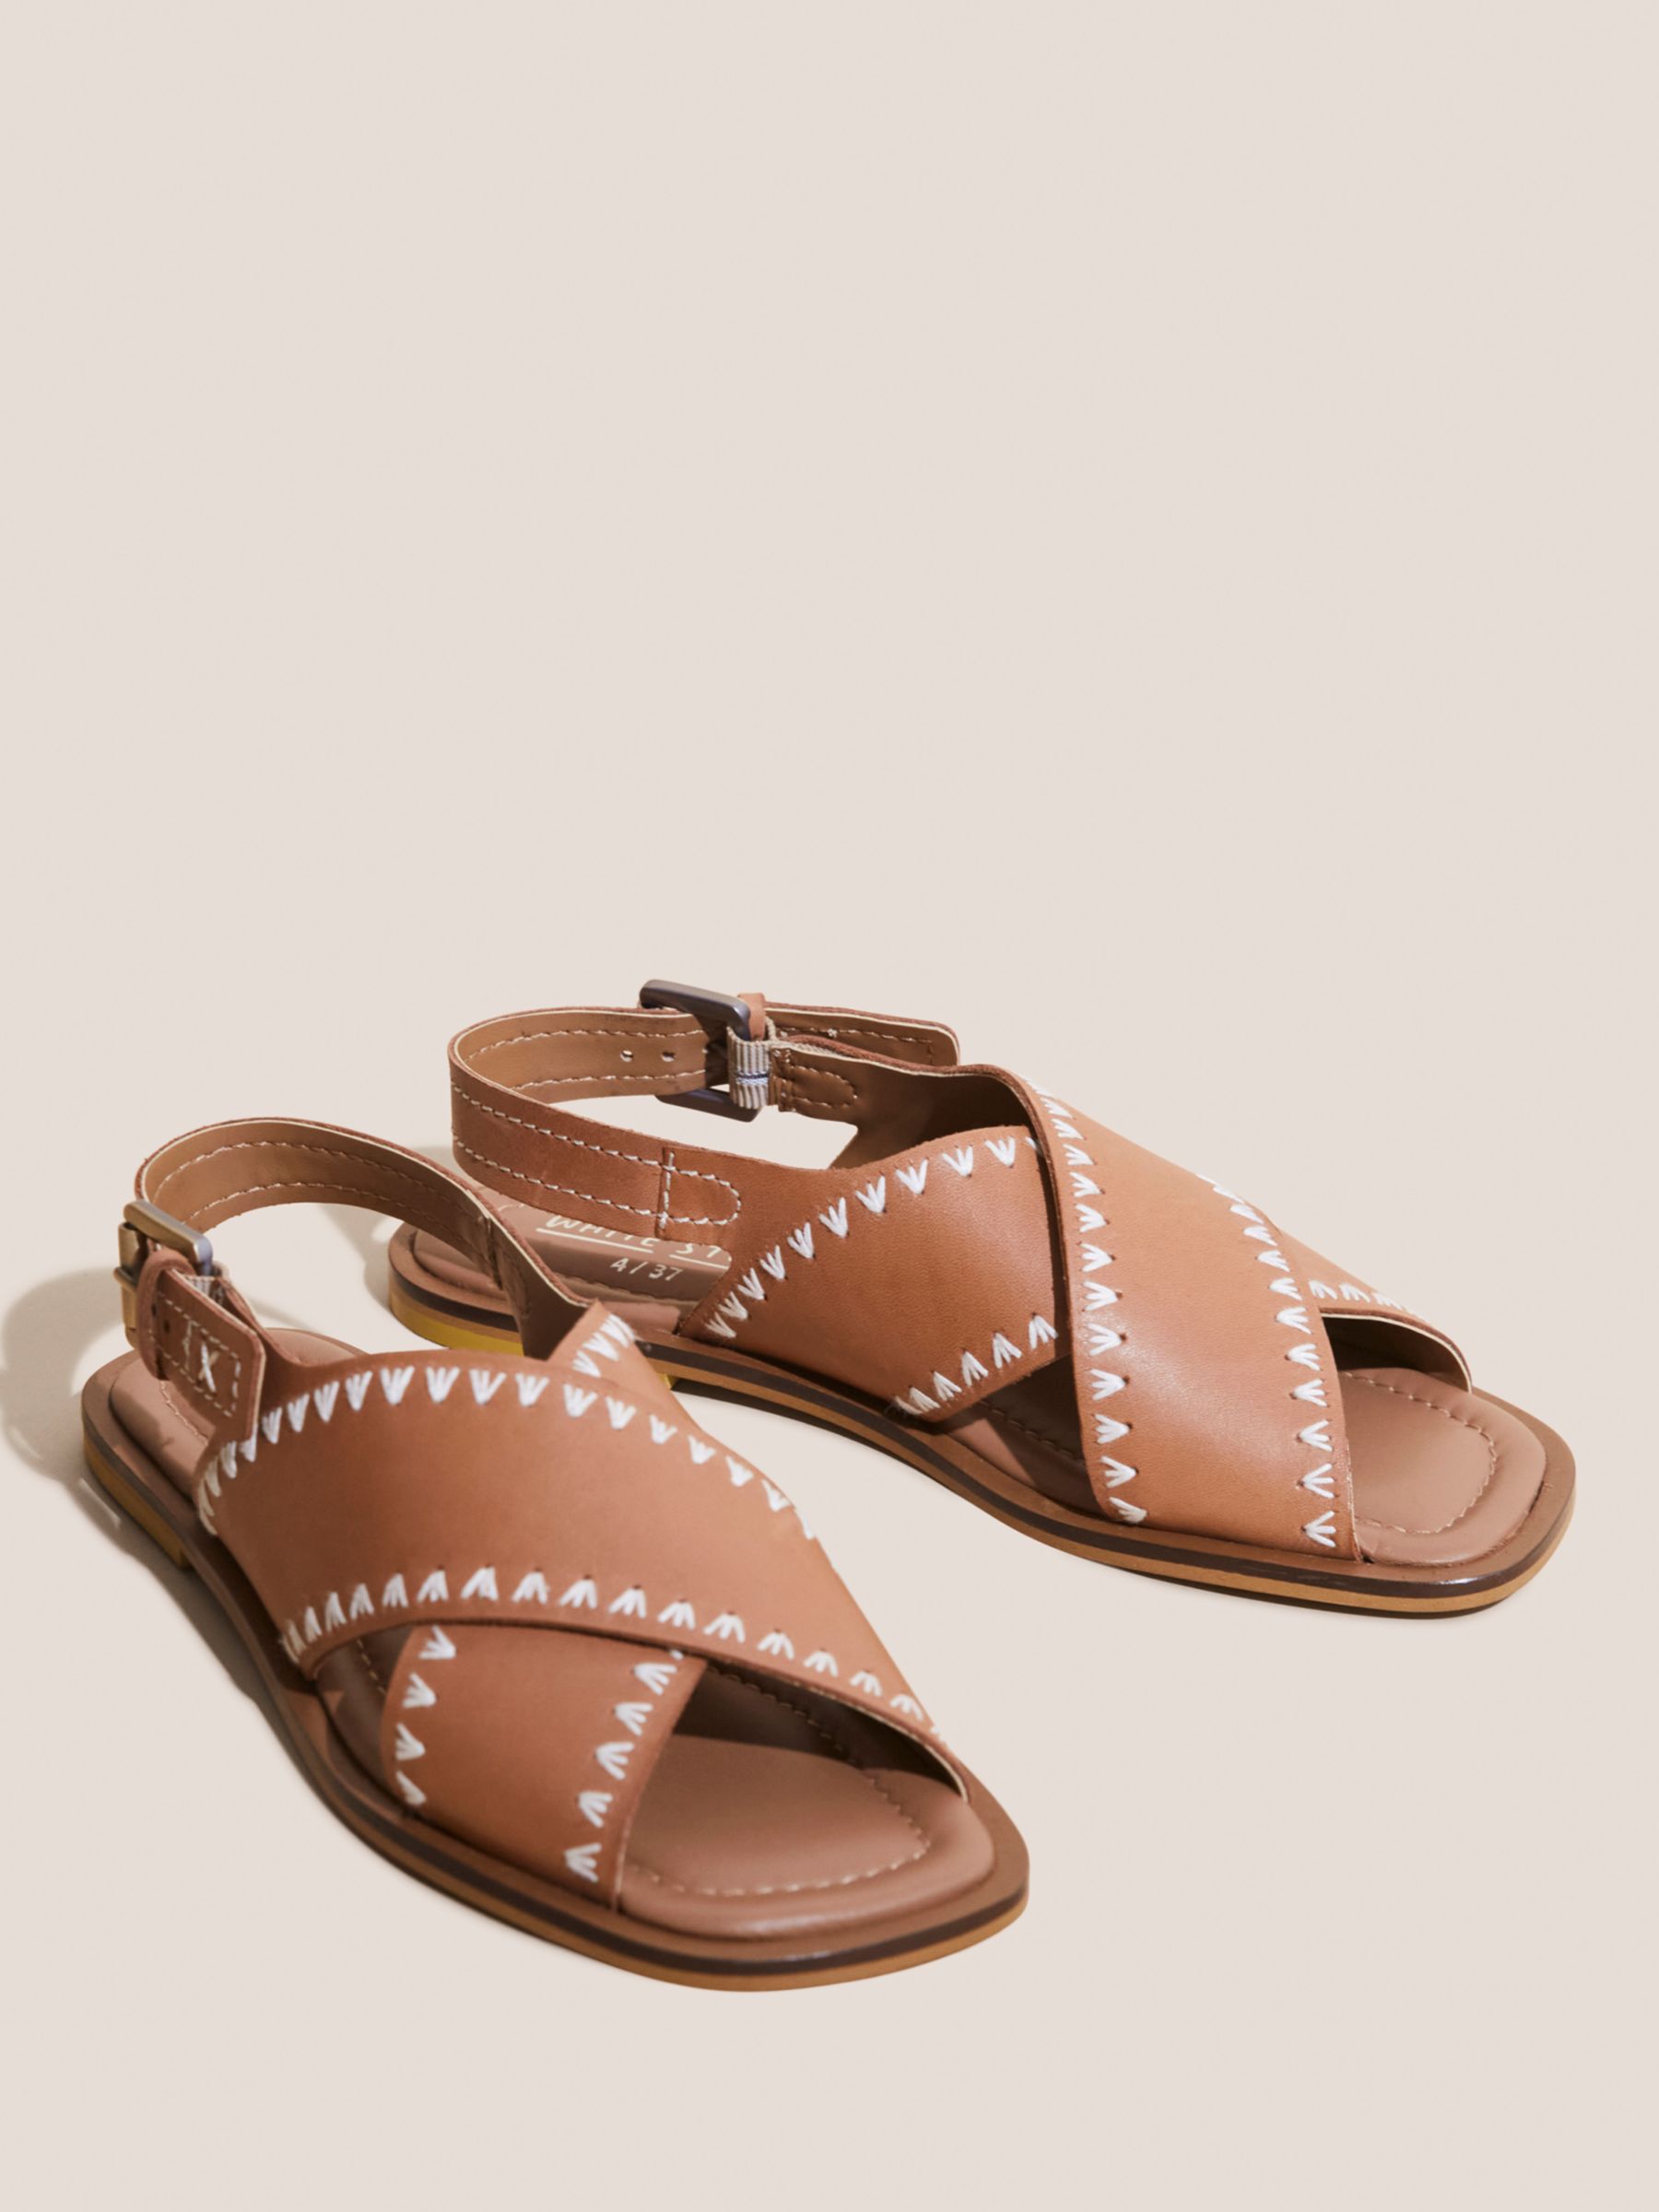 White Stuff Craft Leather Sandals, Tan, 3